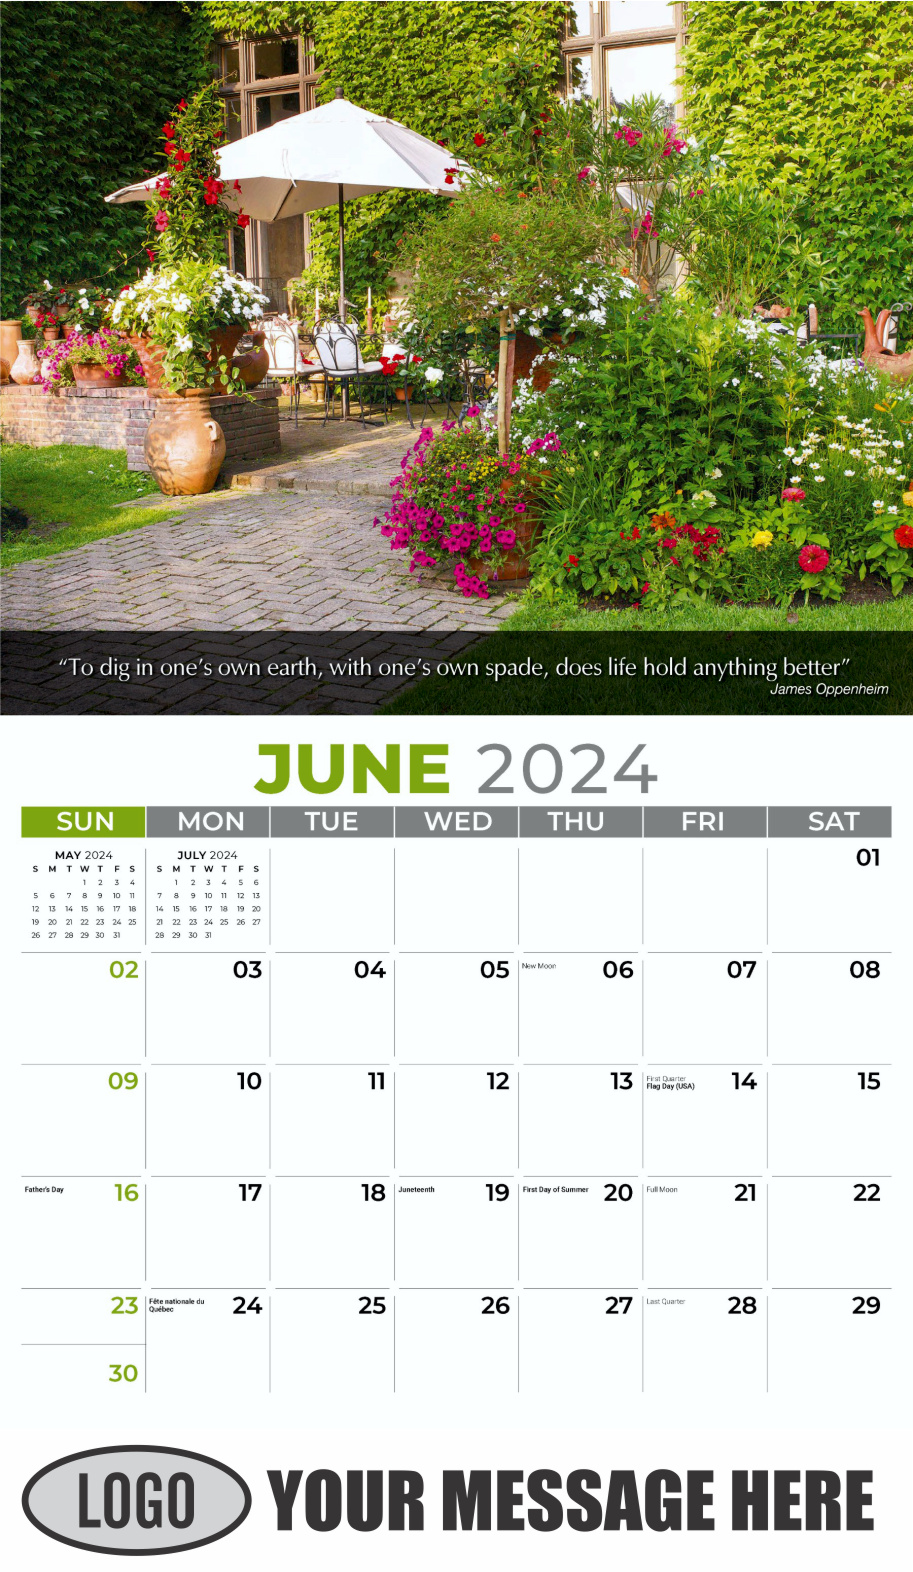 Flowers and Gardens 2024 Business Advertising Calendar - June